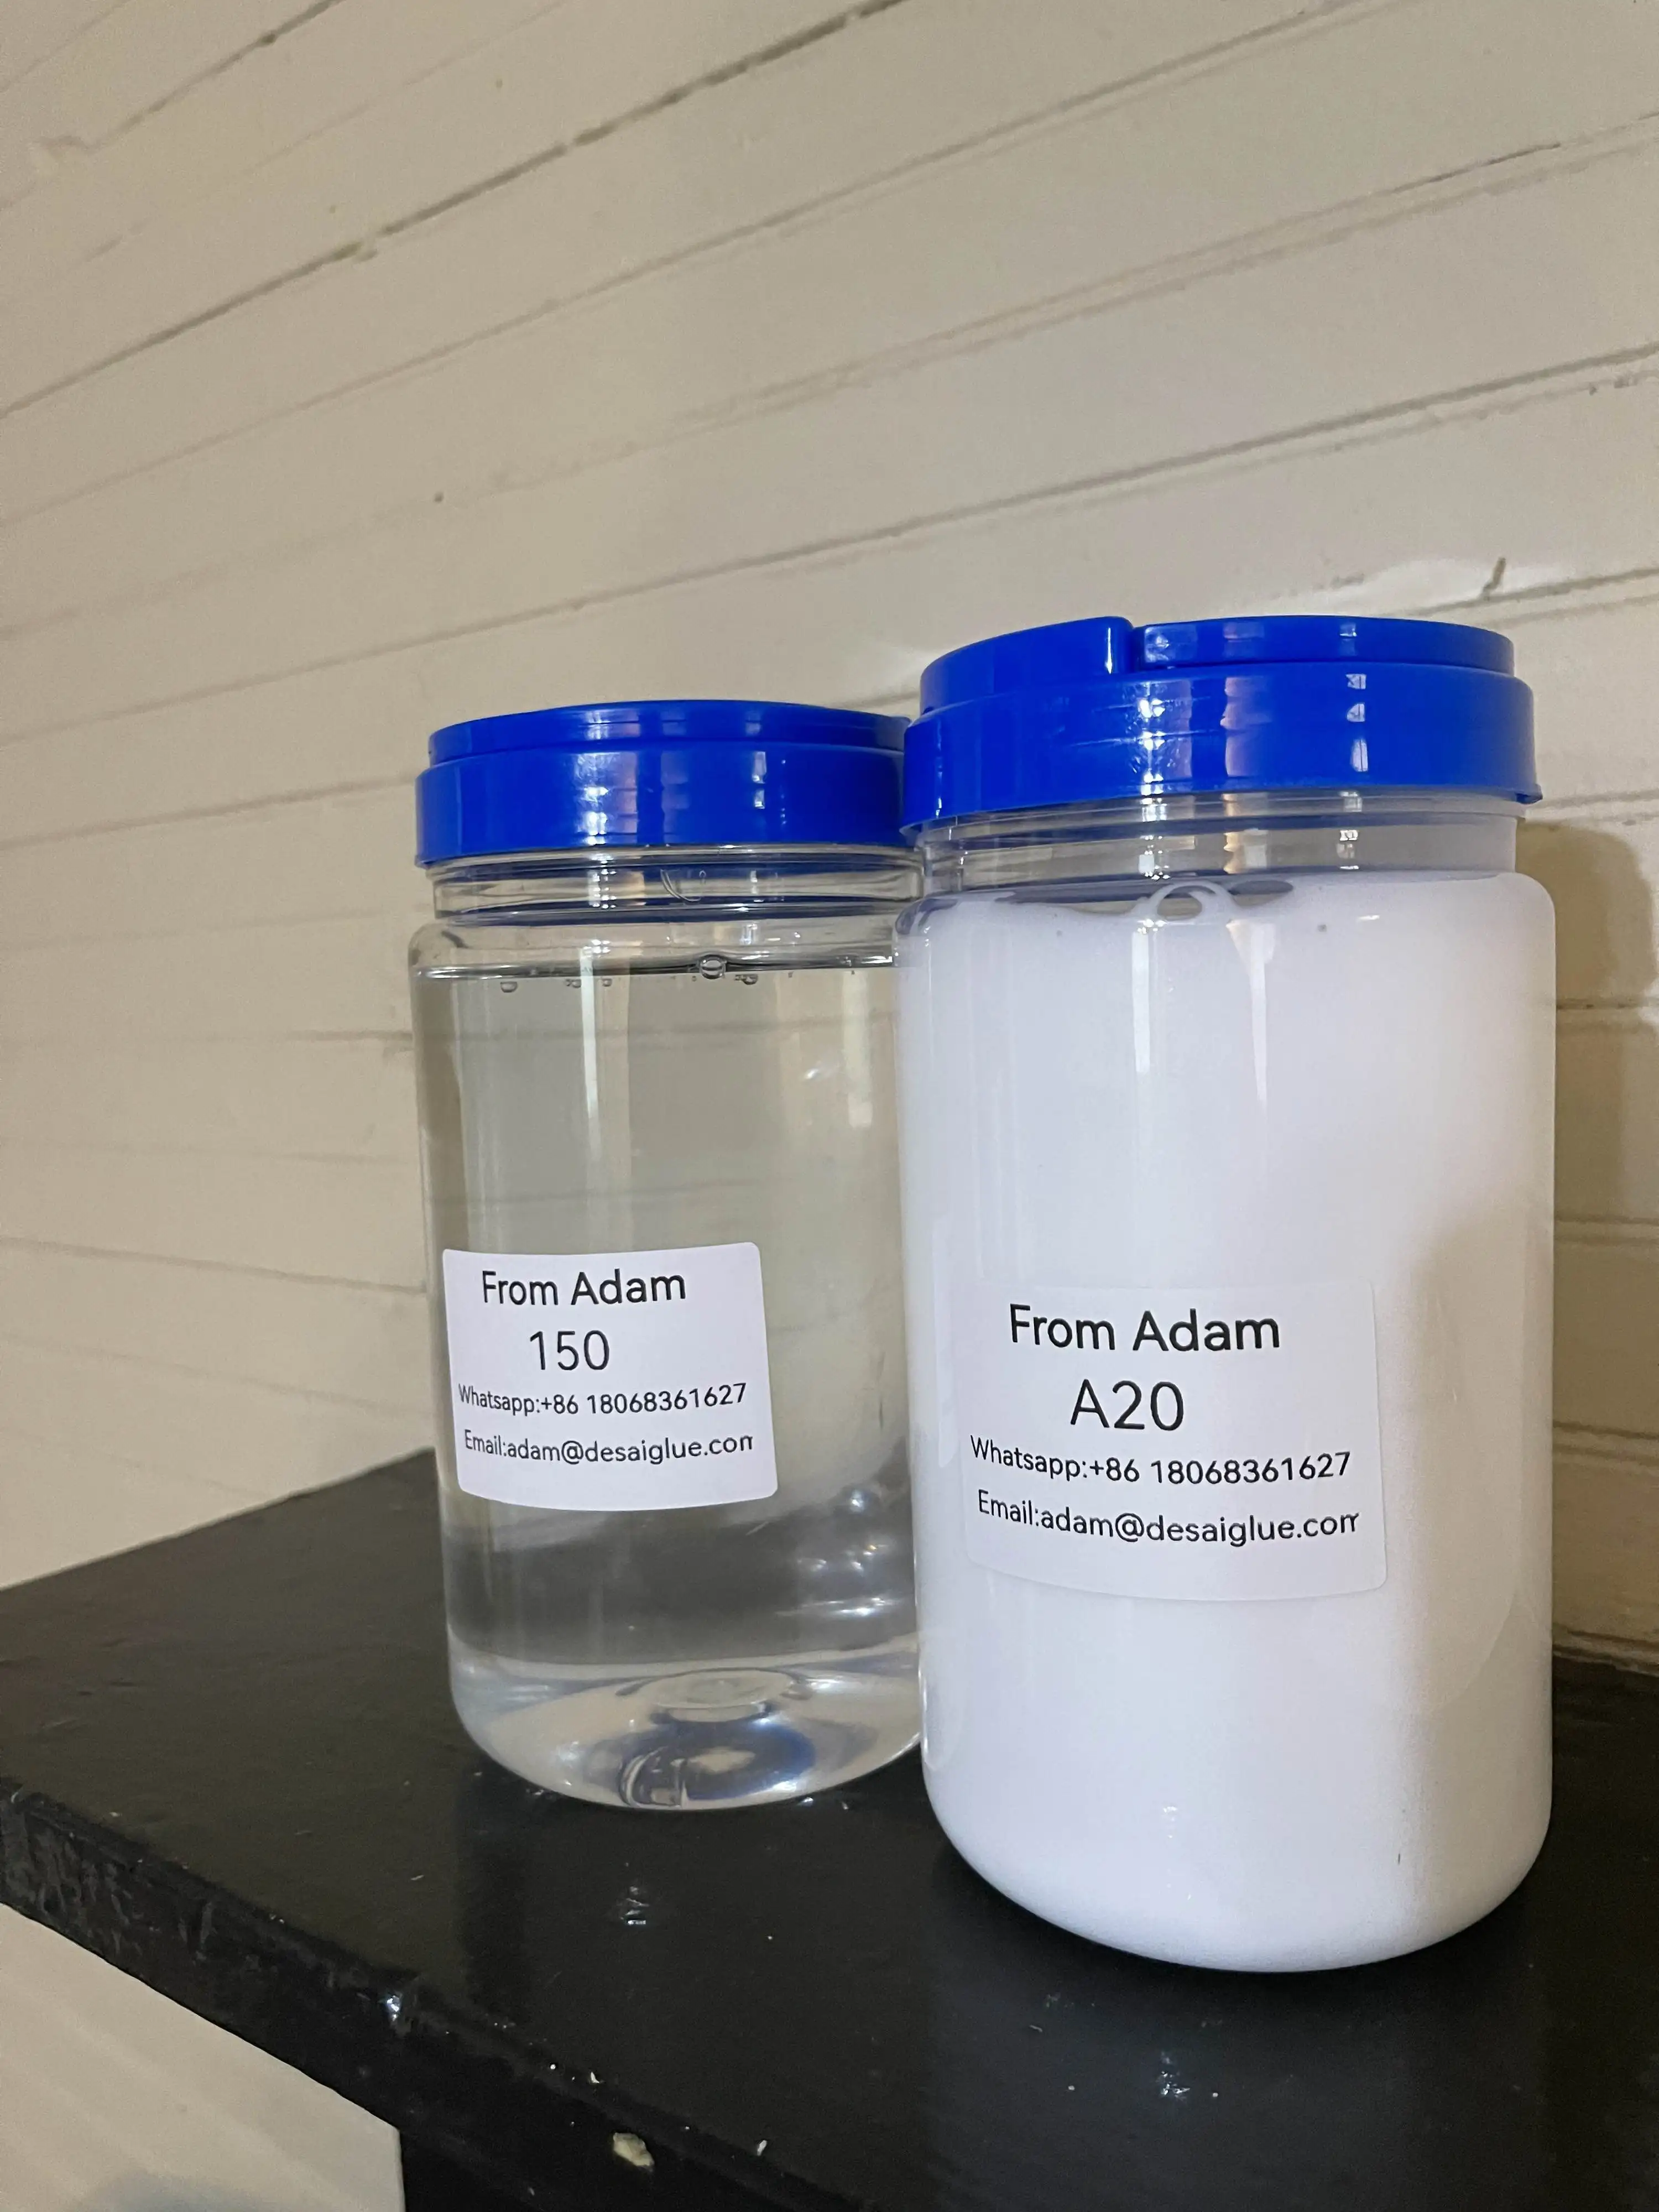 Manufacture Slime White Glue School Glue 1 Gallon - Buy